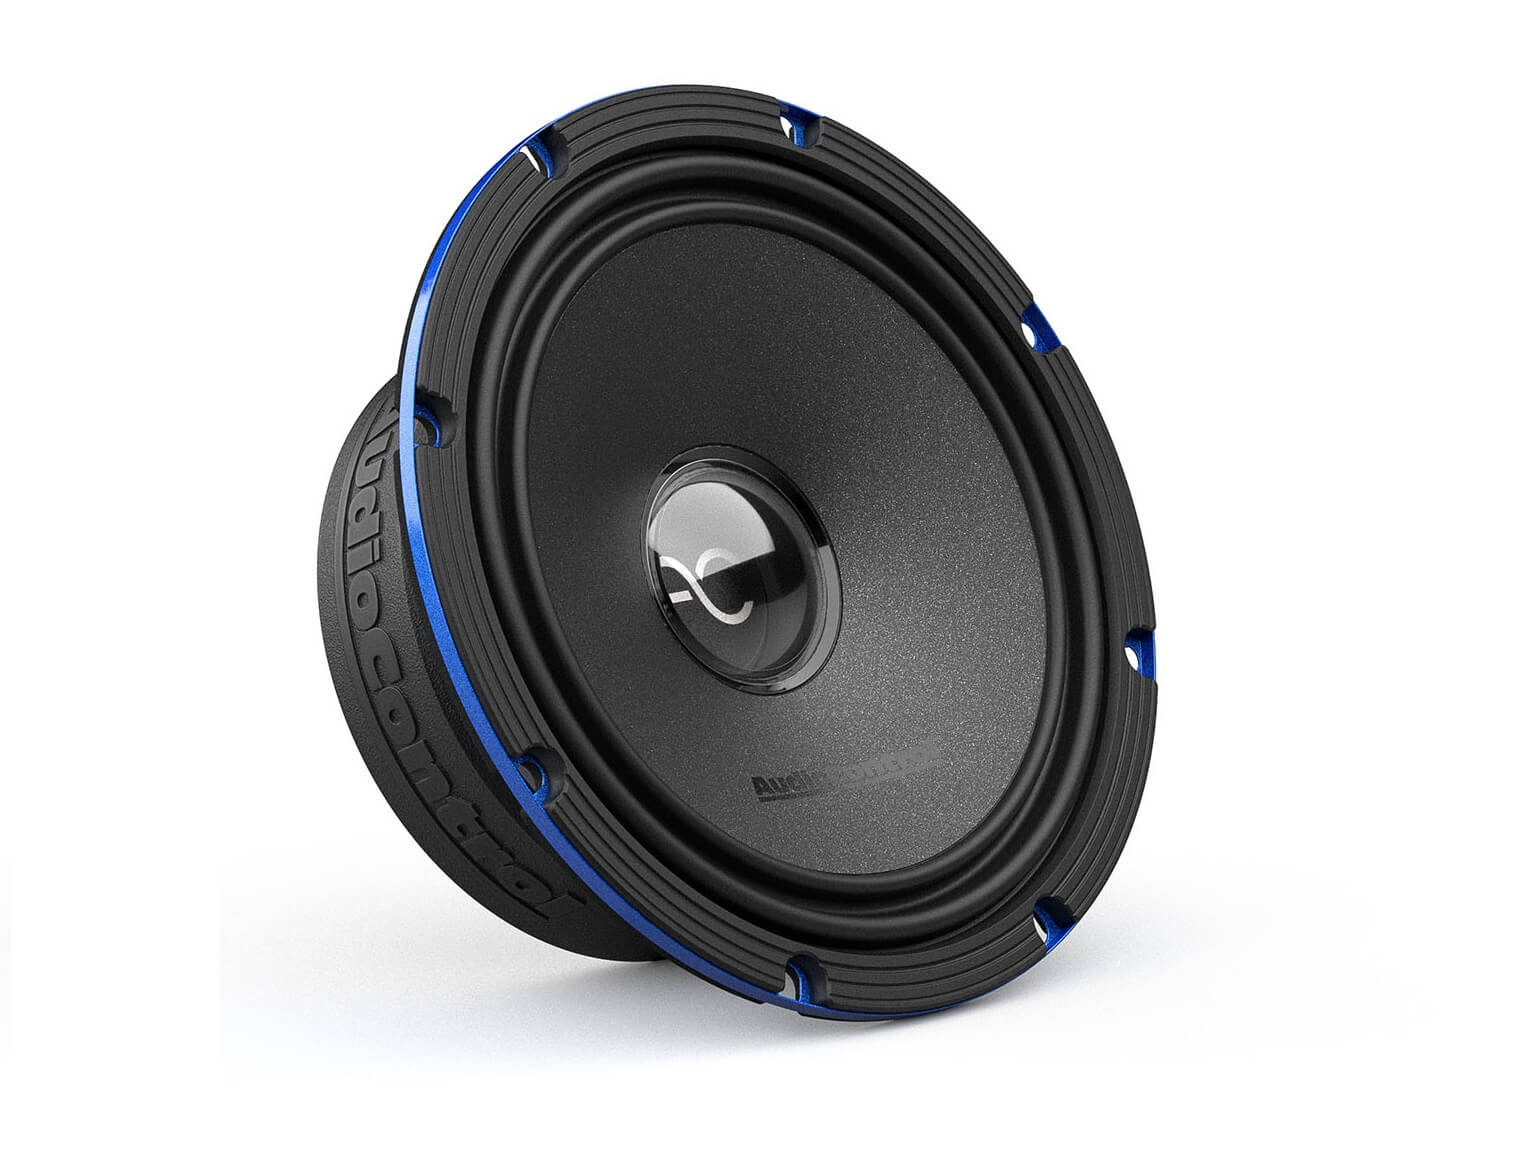 AudioControl PNW-65CS2 - 6.5 Inch Component Speakers